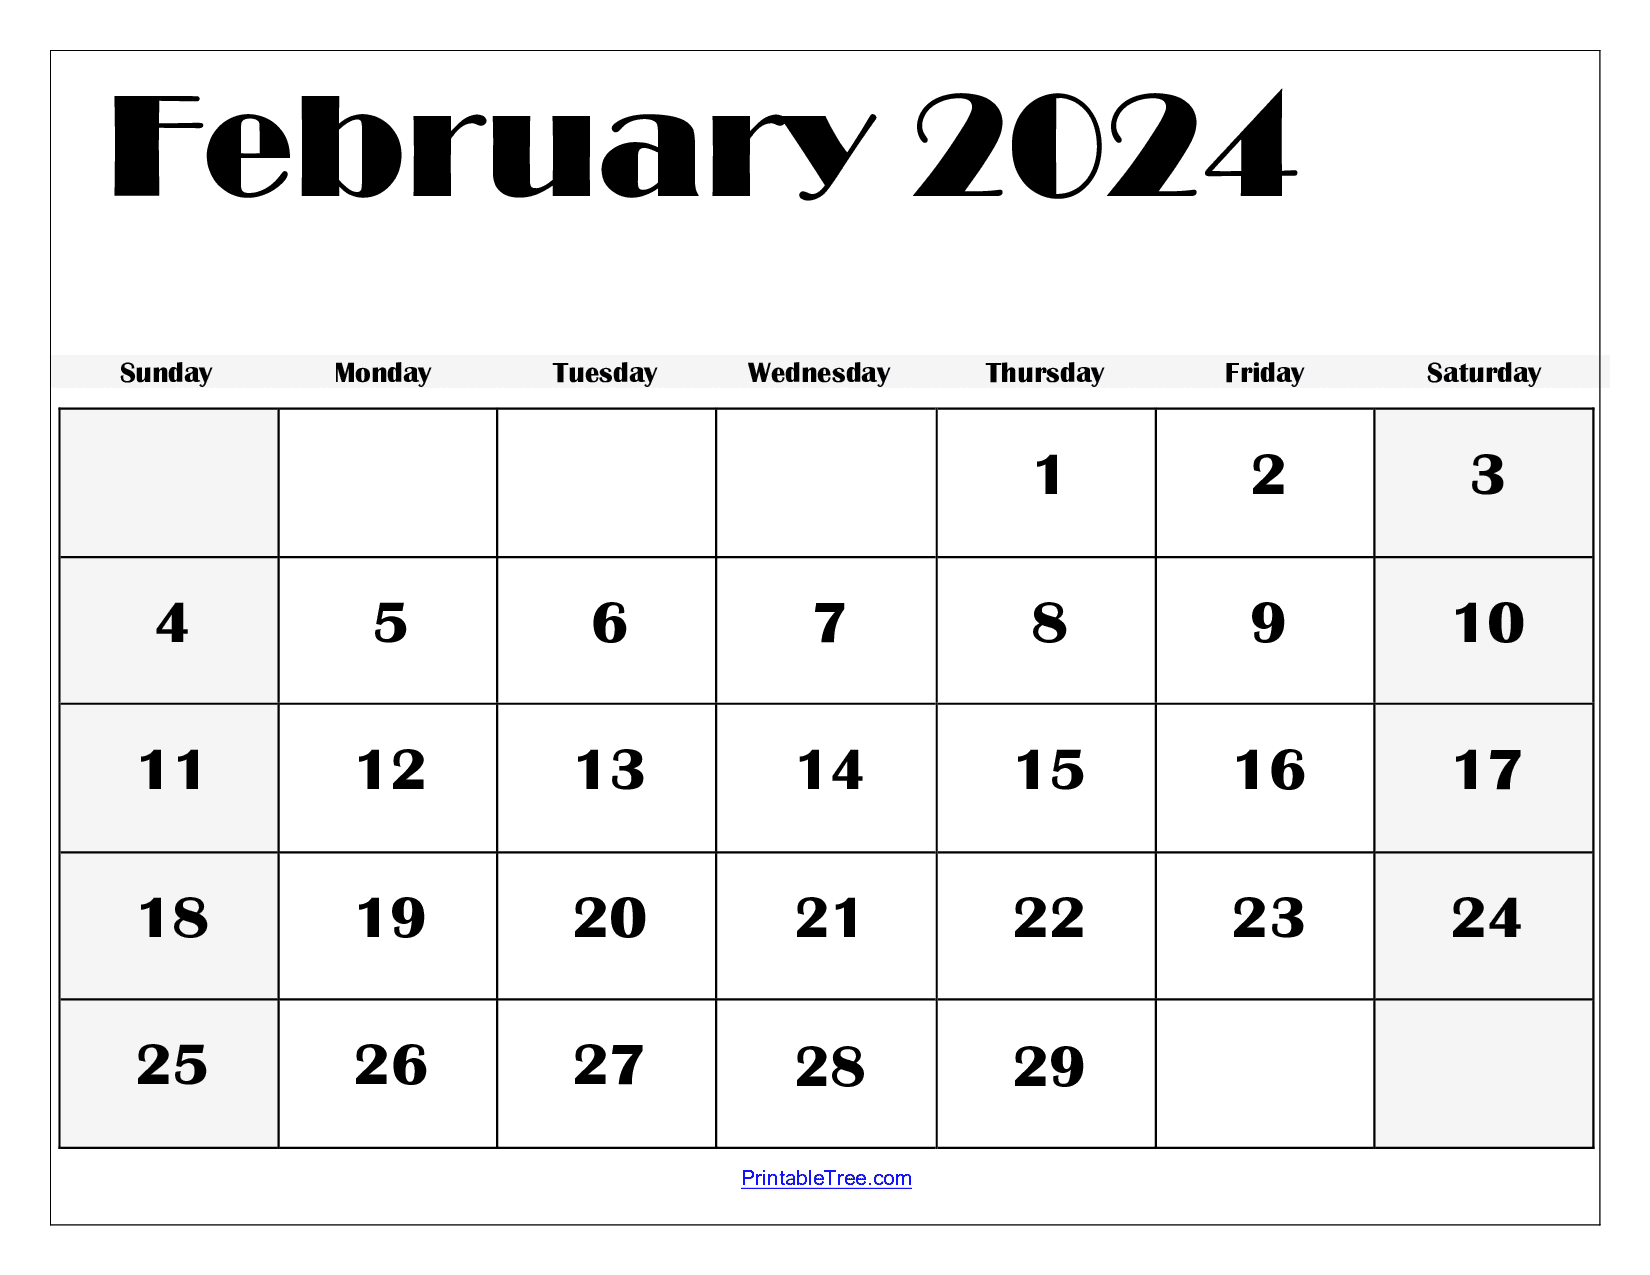 February 2024 Calendar Printable Pdf Template With Holidays for Free Calendar February 2024 Printable